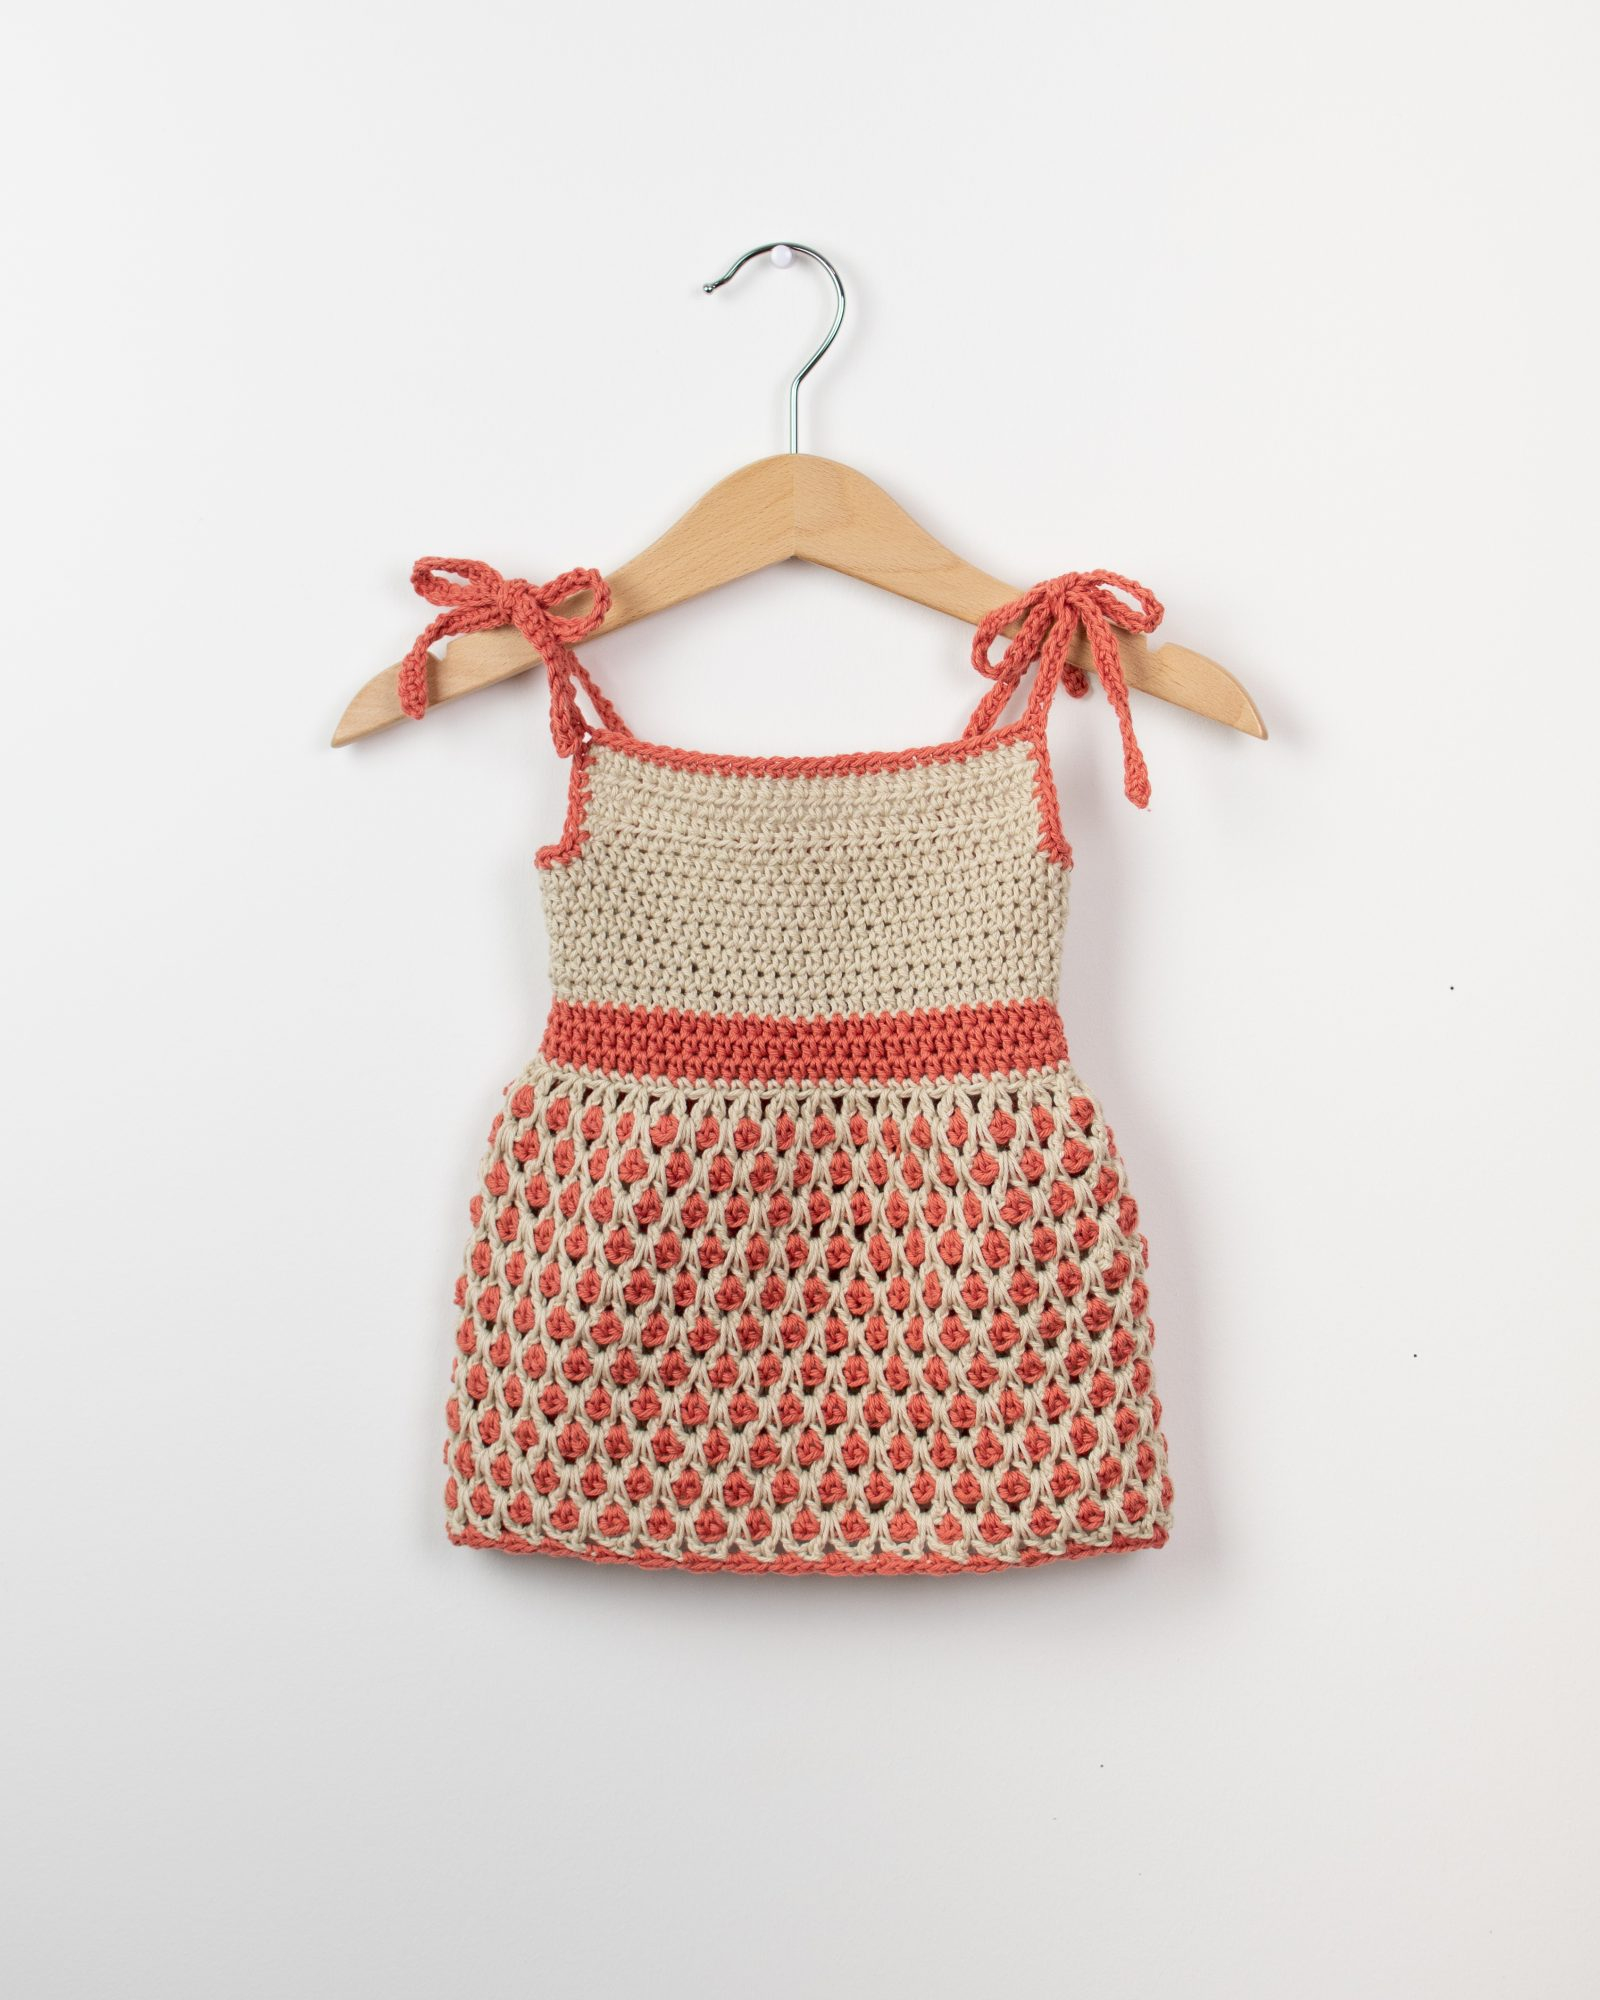 Crochet Clothing Patterns Crochet Pattern For A Ba Dress Little Ladybug Cro Patterns